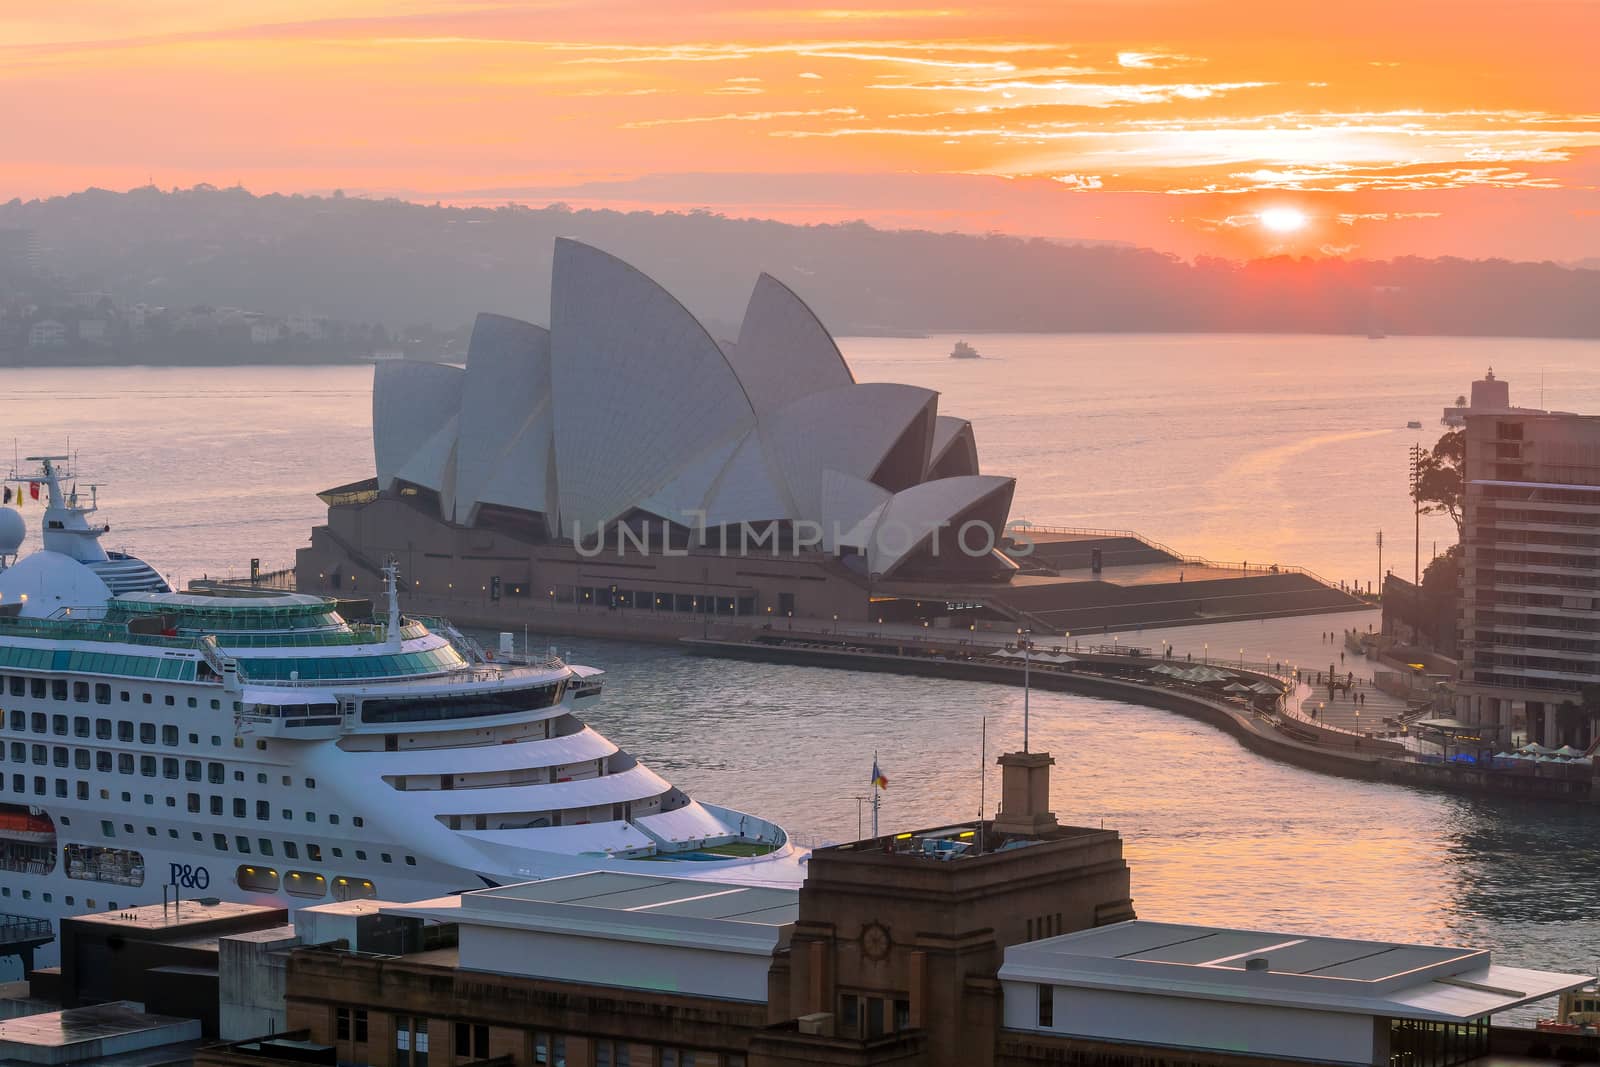  Sydney Opera House with city skyline, Sydney, Australia by f11photo